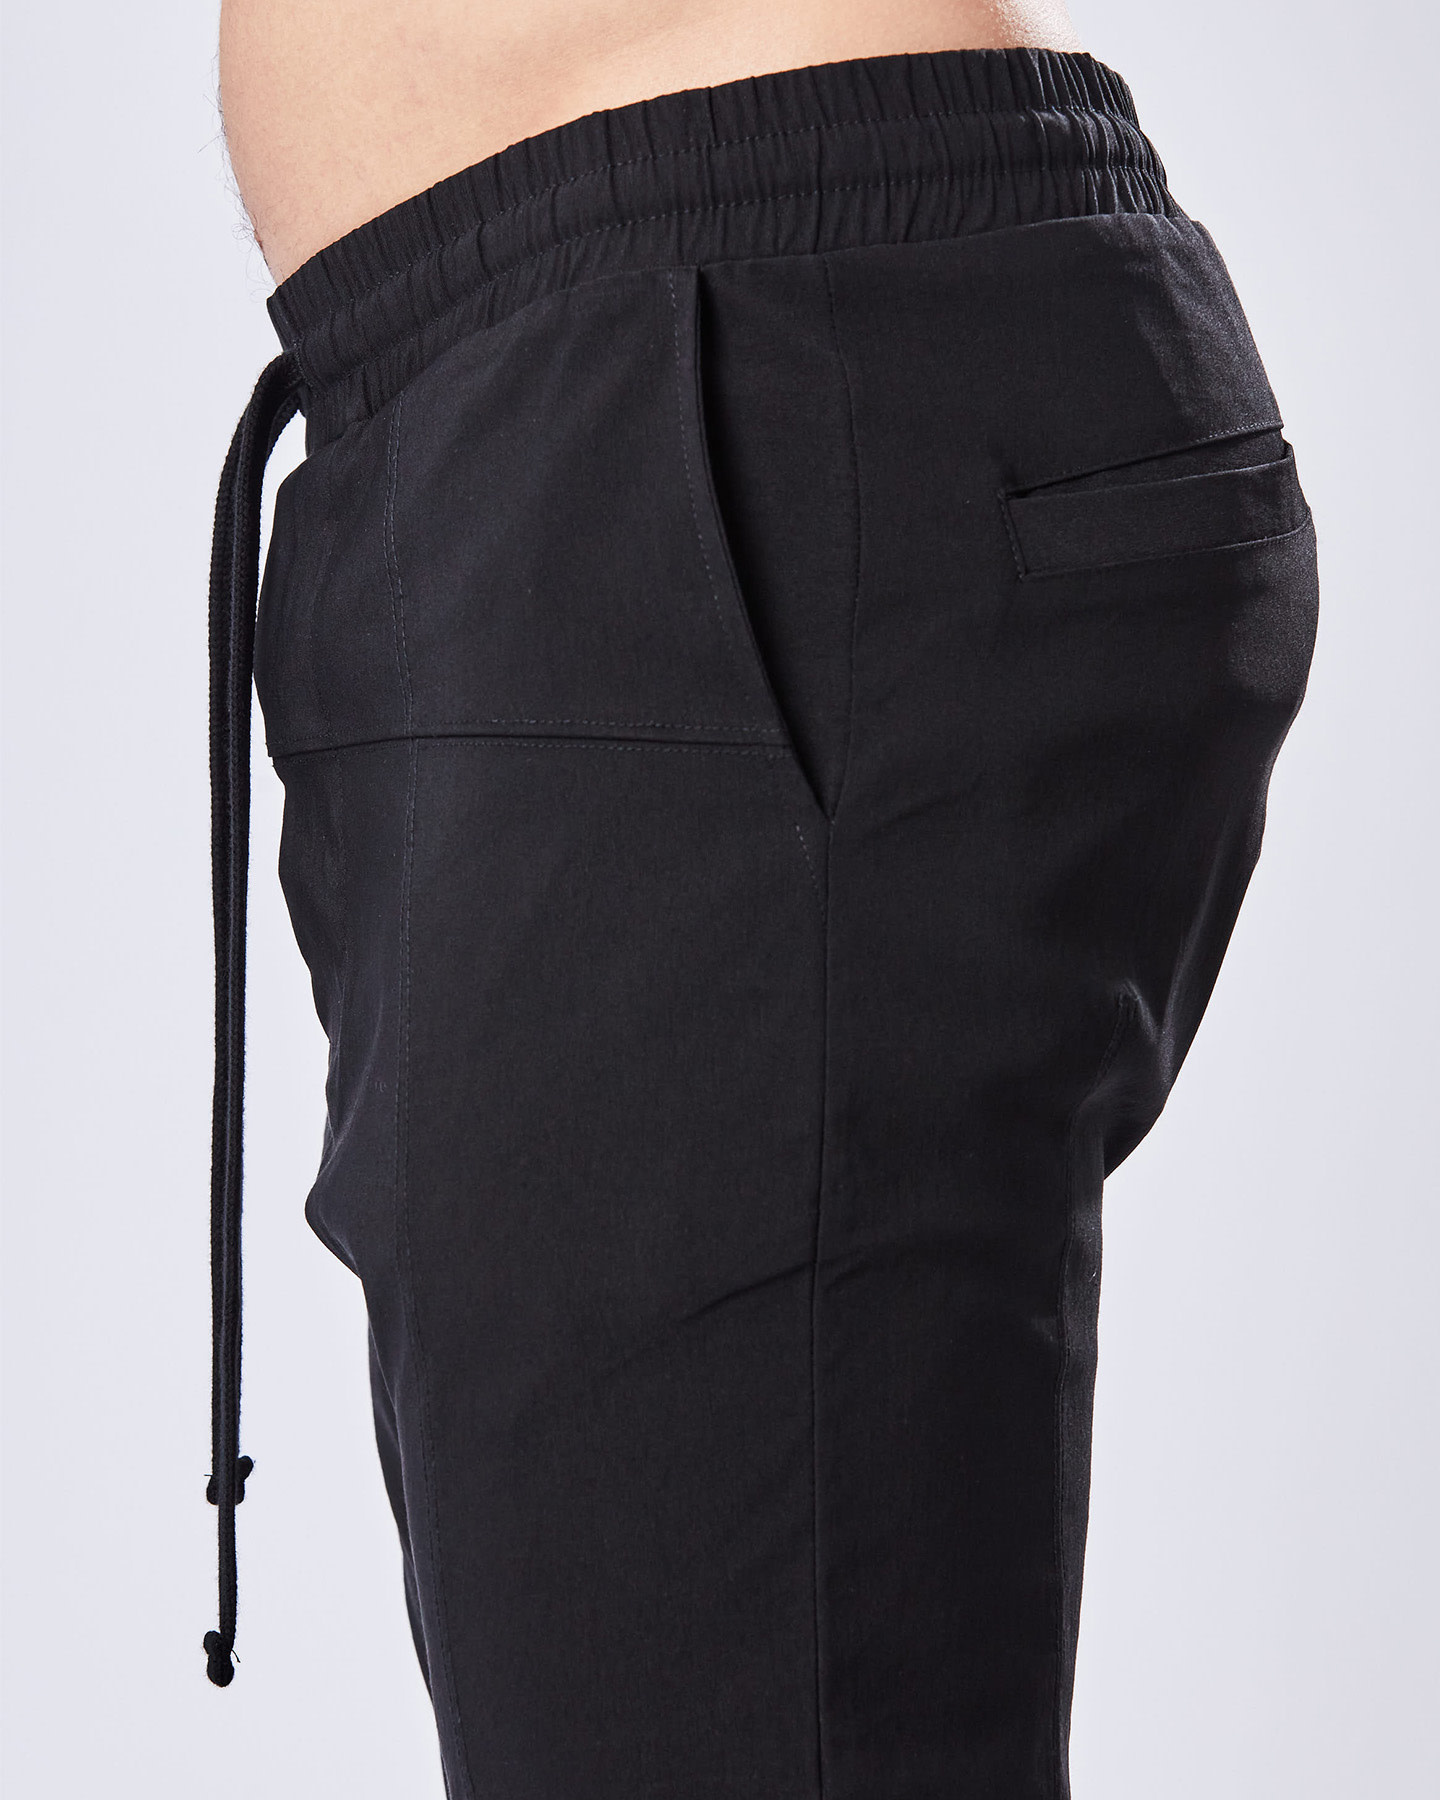 Men's Jogger Sweatpants Slim Fit Nylon Stretch Athletic Pants - Black / M